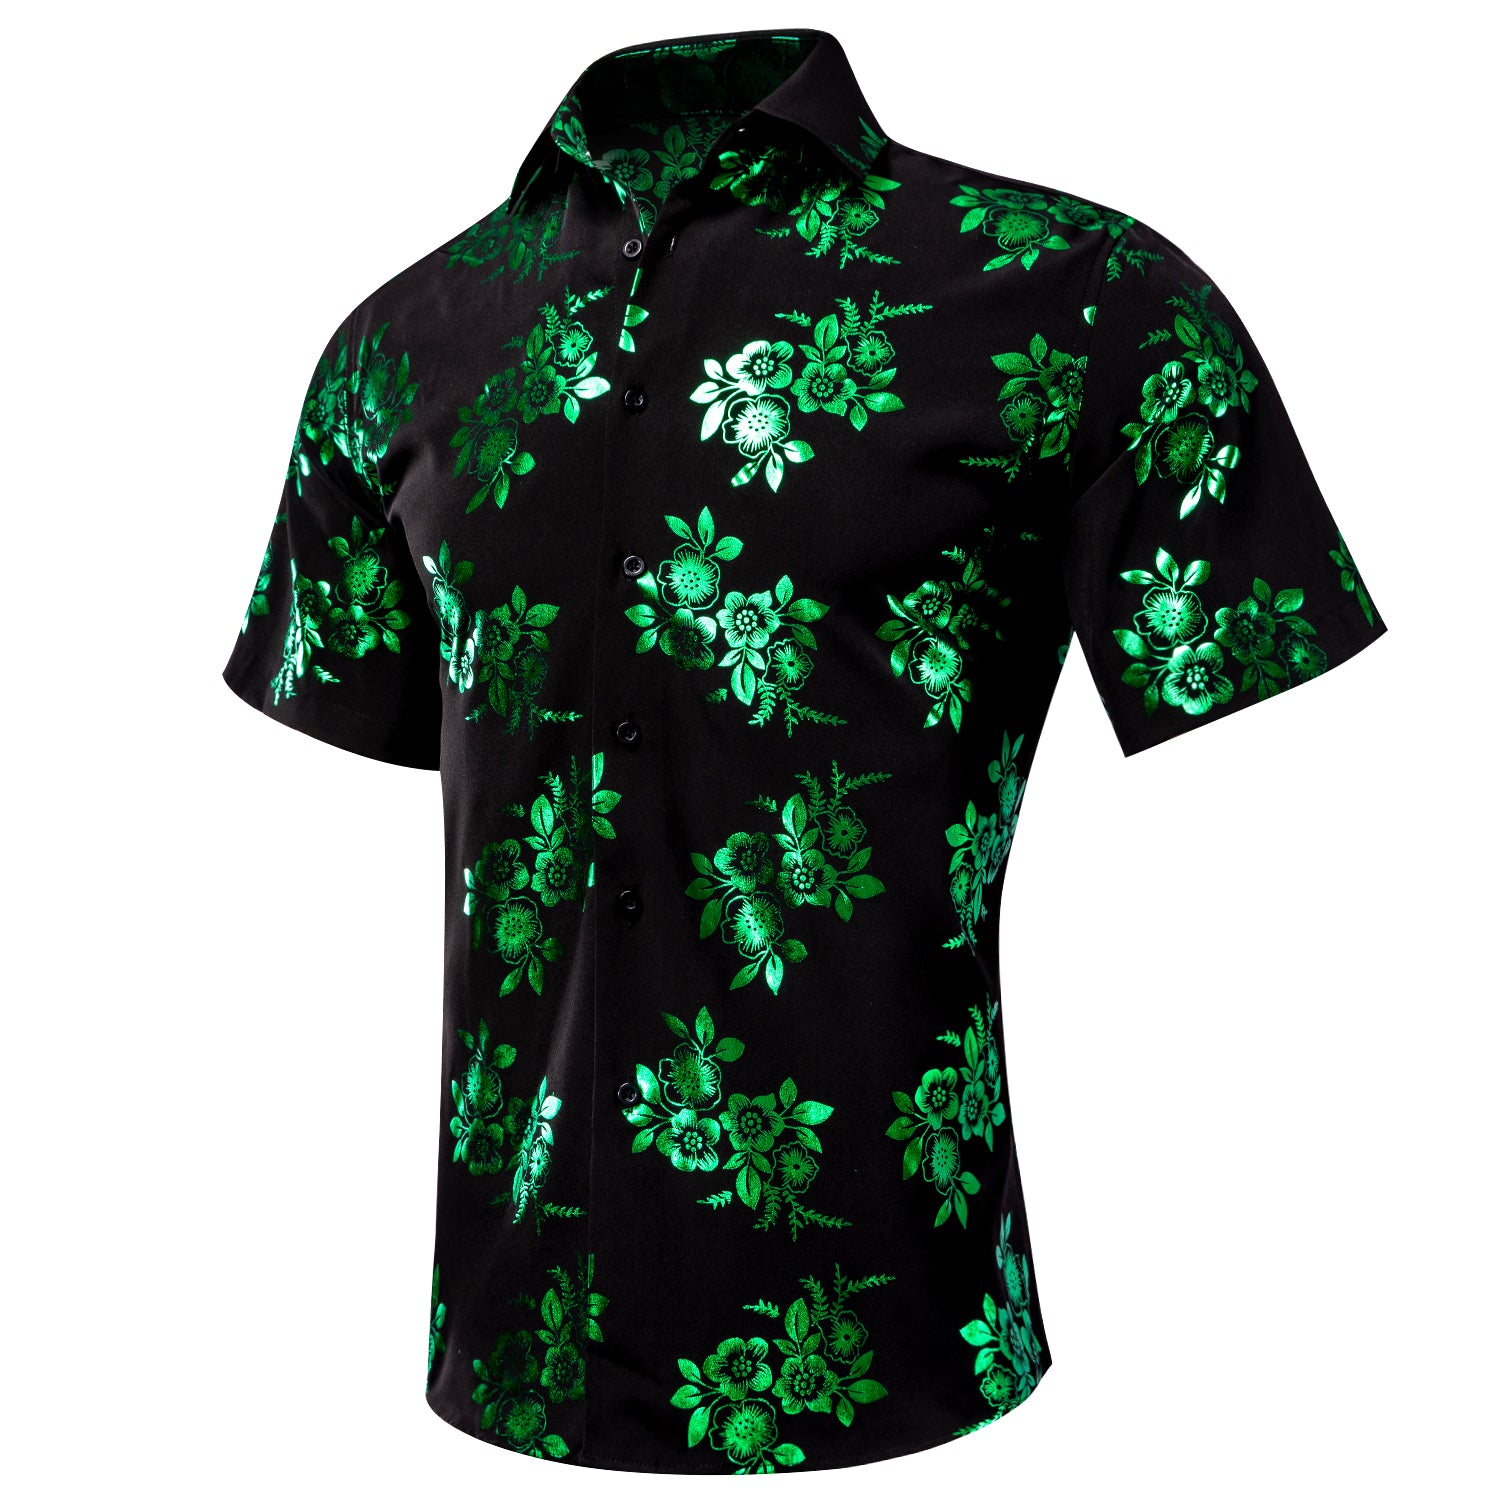 New Black Green Floral Men's Short Sleeve Shirt